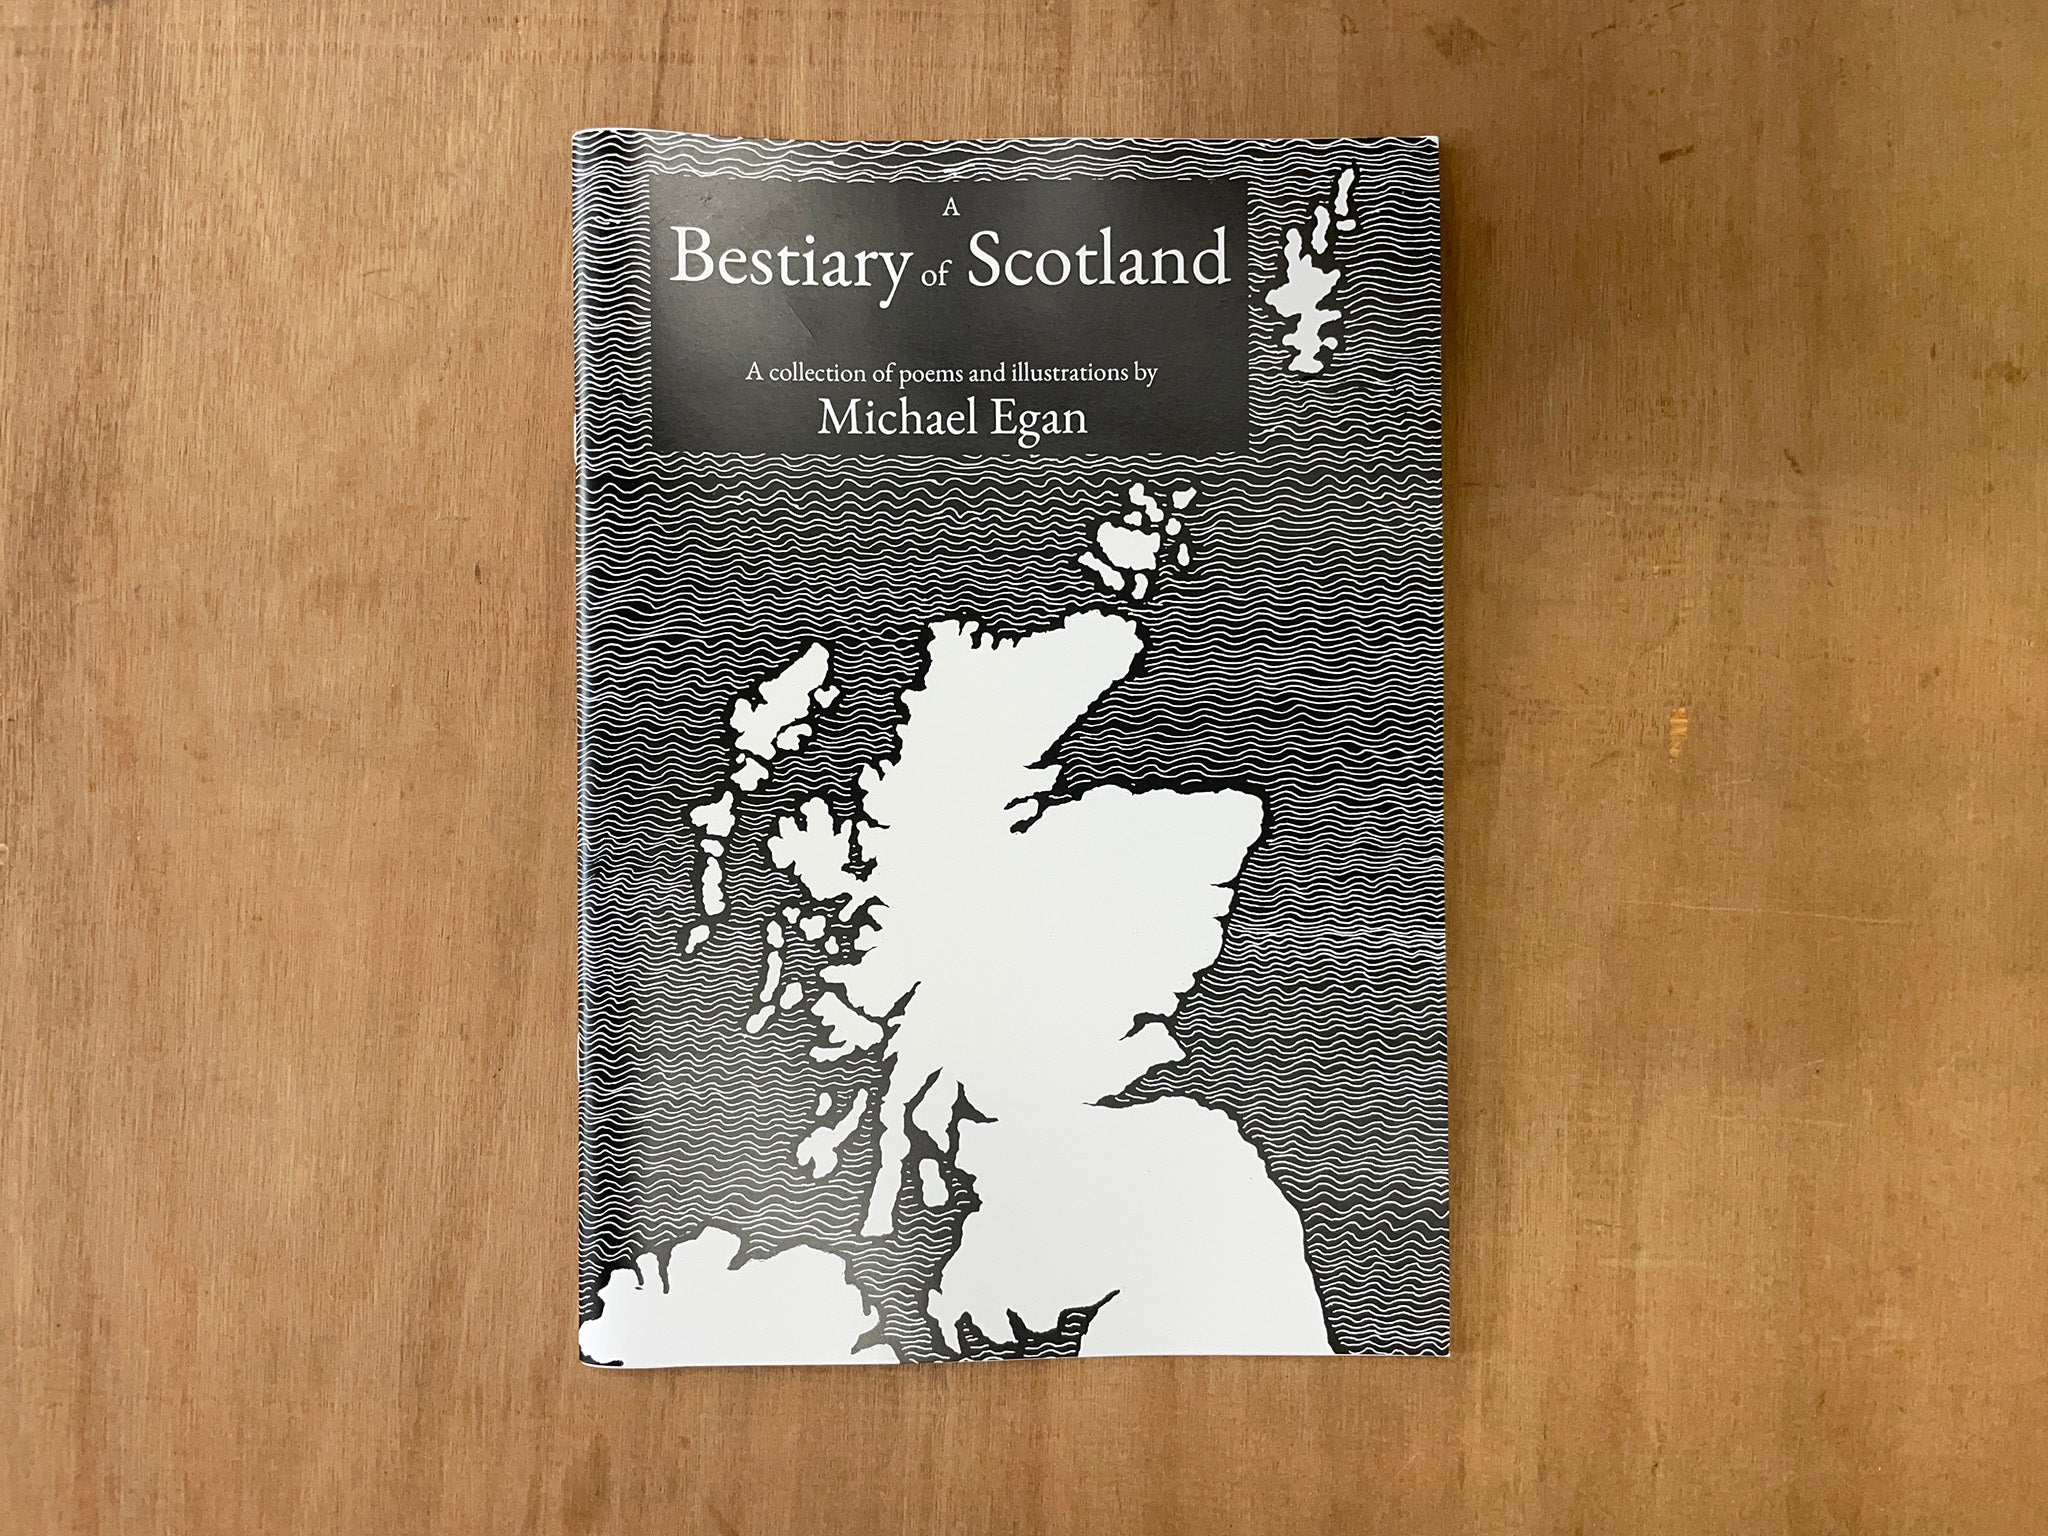 A BESTIARY OF SCOTLAND by Michael Egan